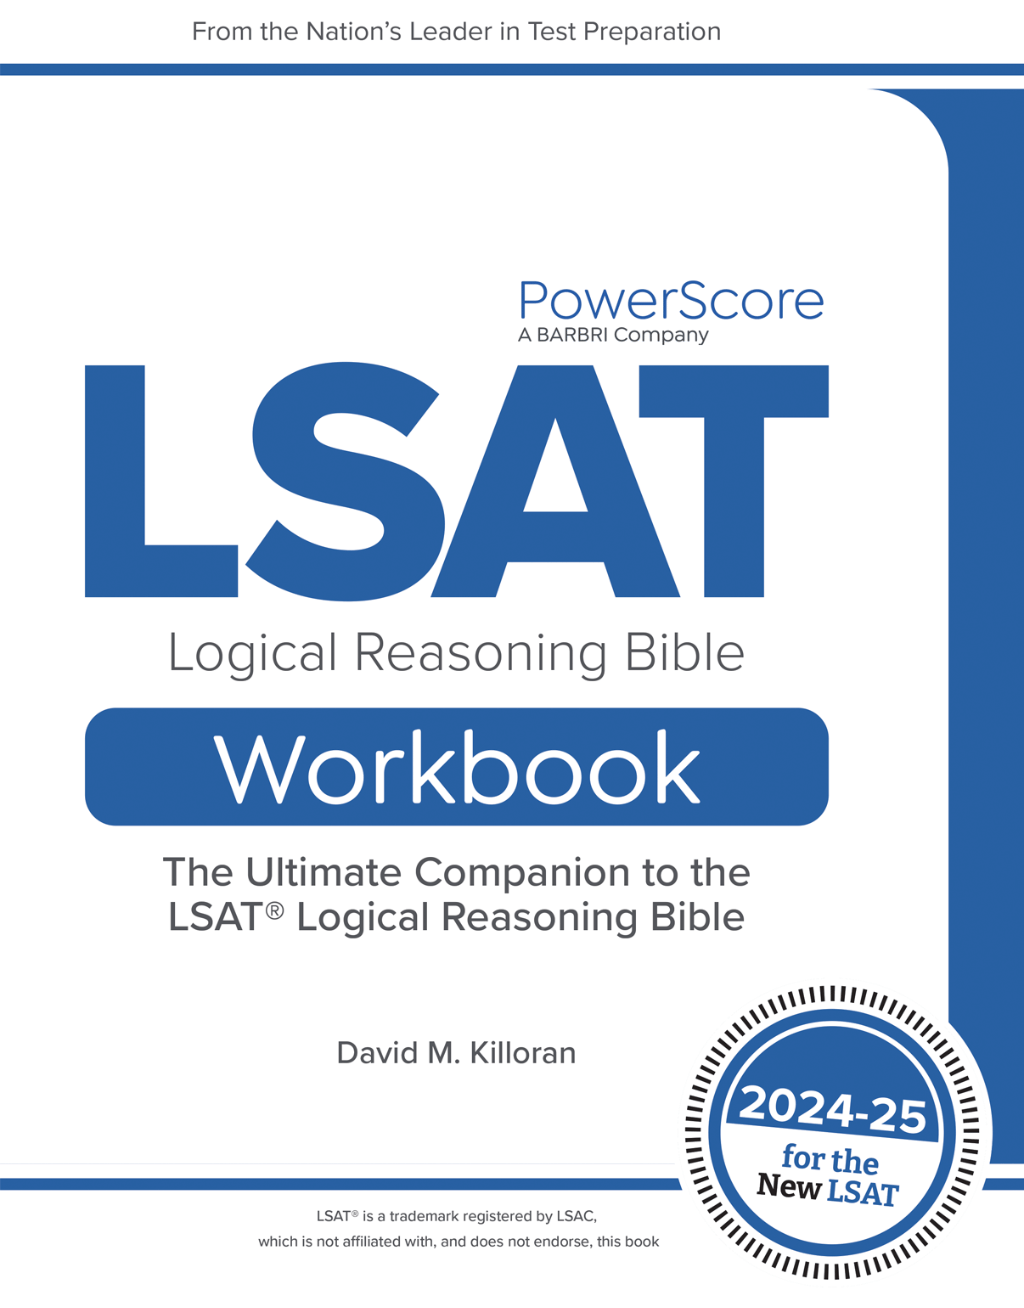 LSAT Logical Reasoning Bible Workbook cover